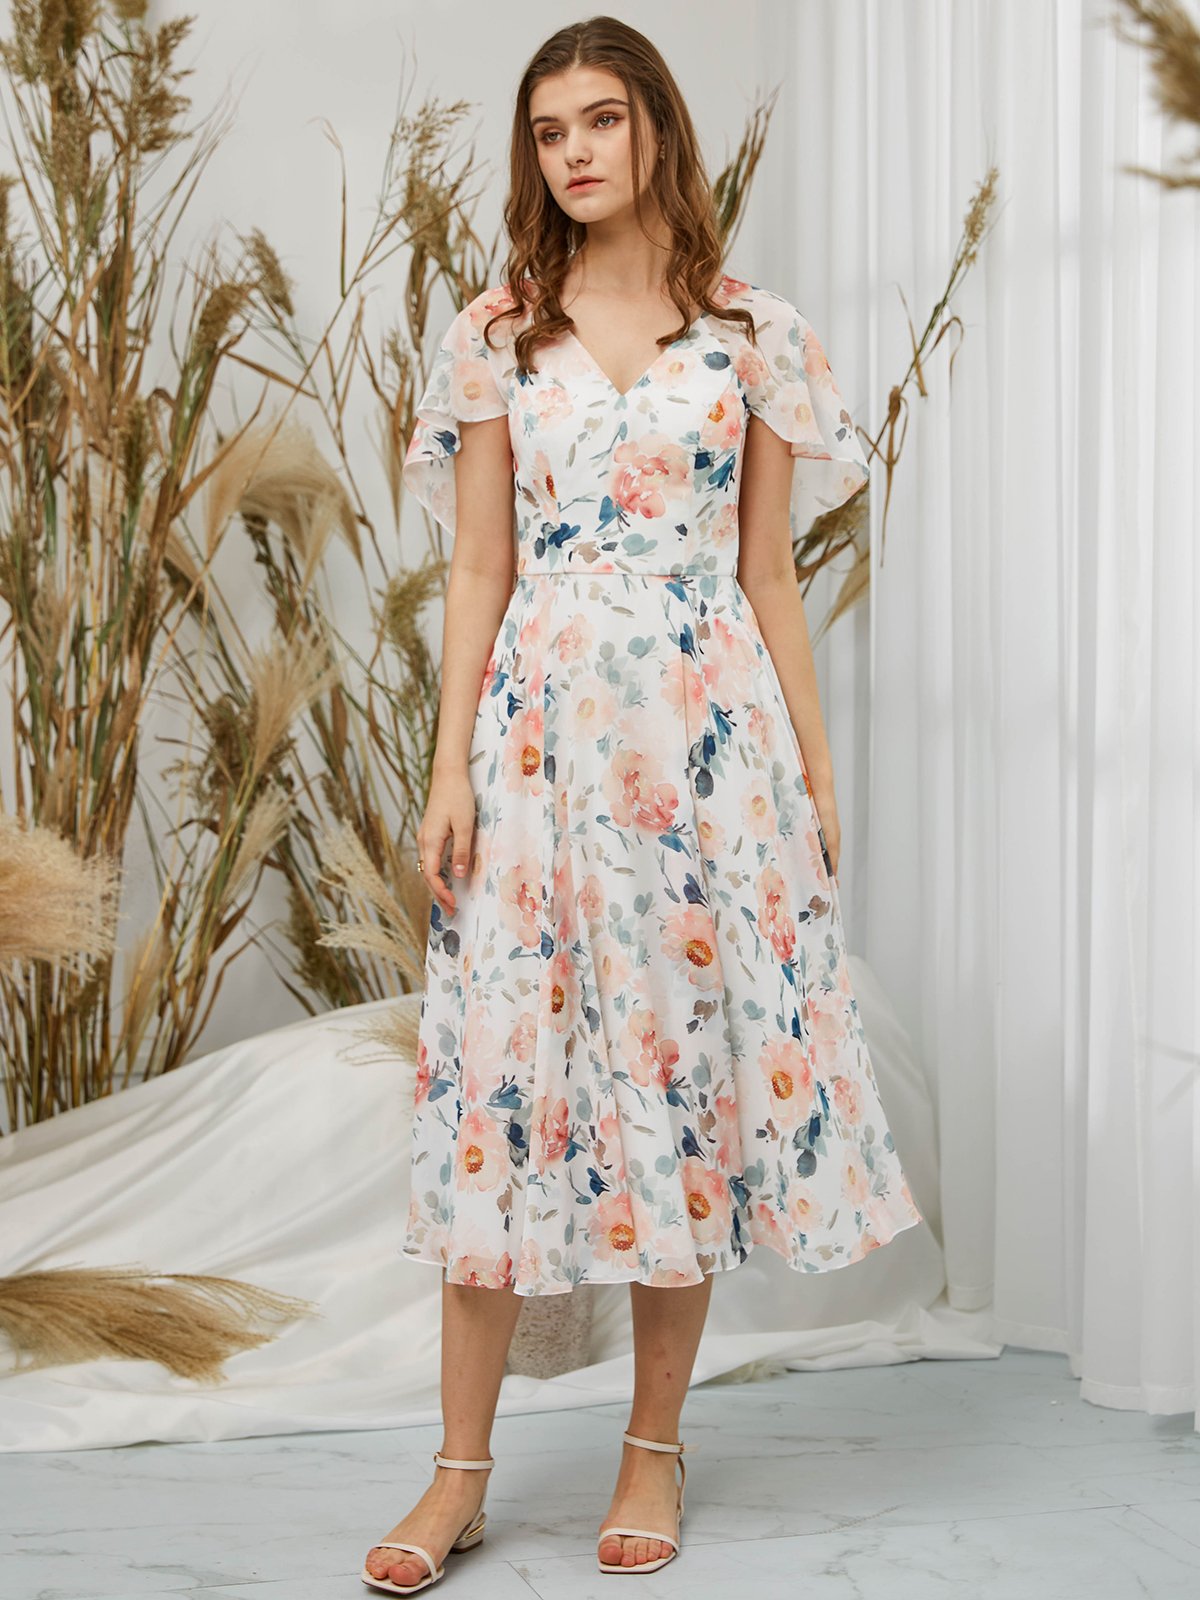 MissJophiel Cap Sleeves V Neck Chiffon Print Floral Peach Formal Party Dress